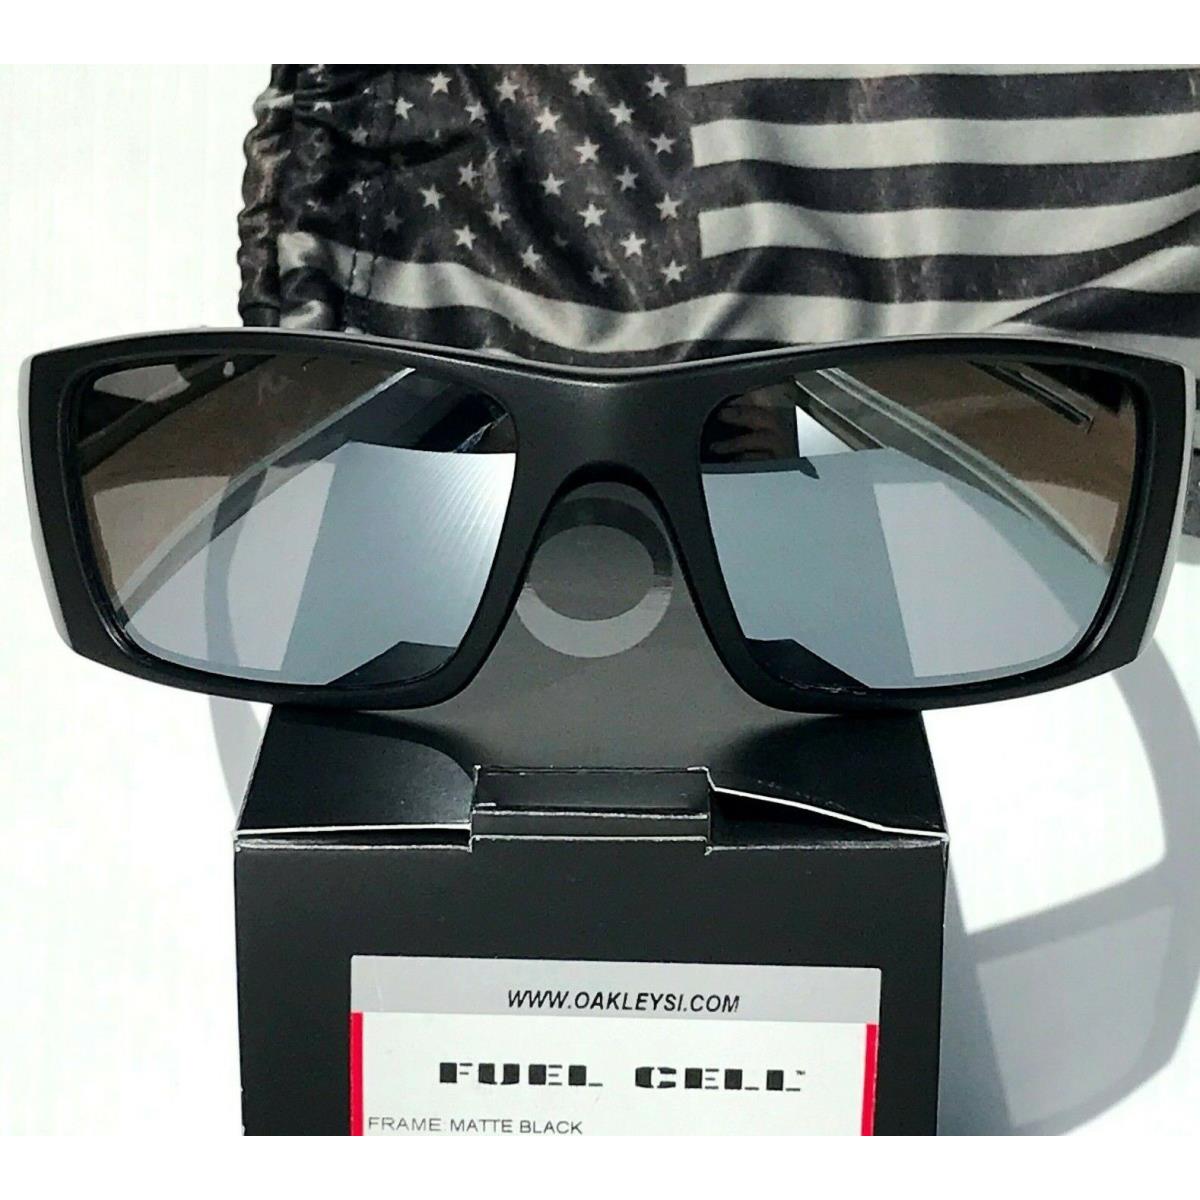 Oakley sunglasses Fuel Cell - Black Frame, Silver Lens 3